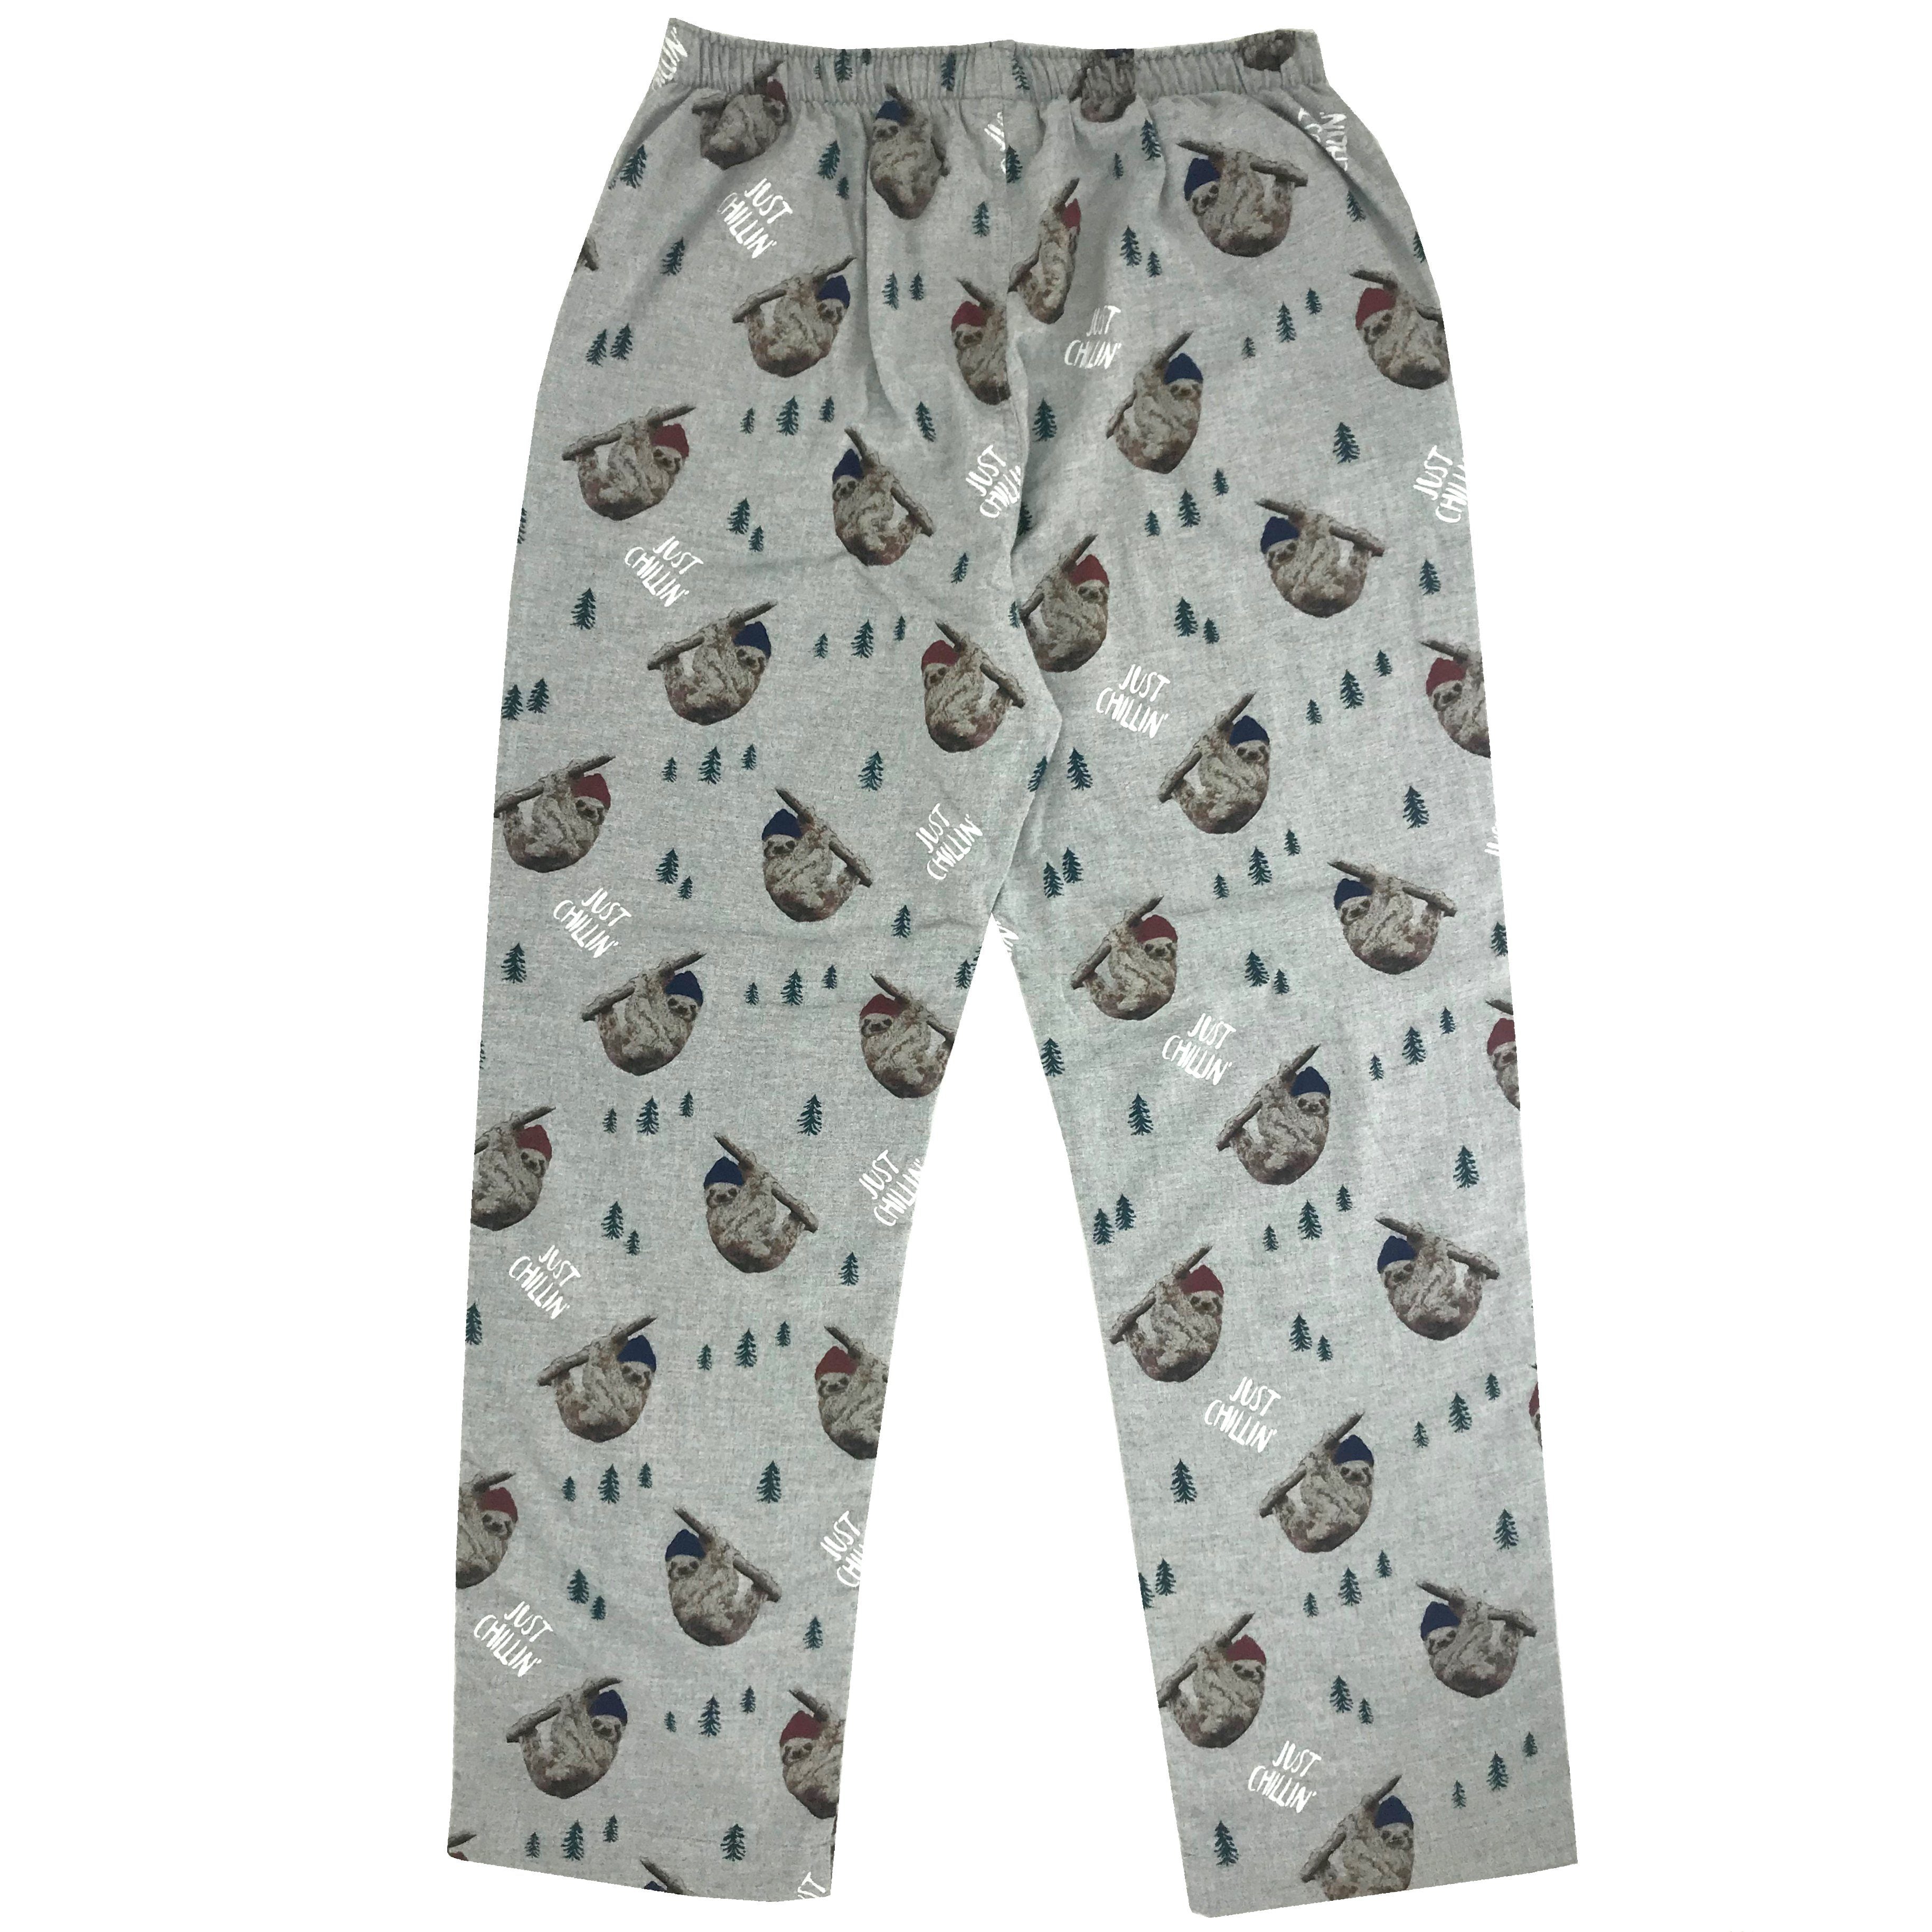 Rock Atoll Men's Sleepwear Loungewear Pyjama Pants with Sloths All Over Them